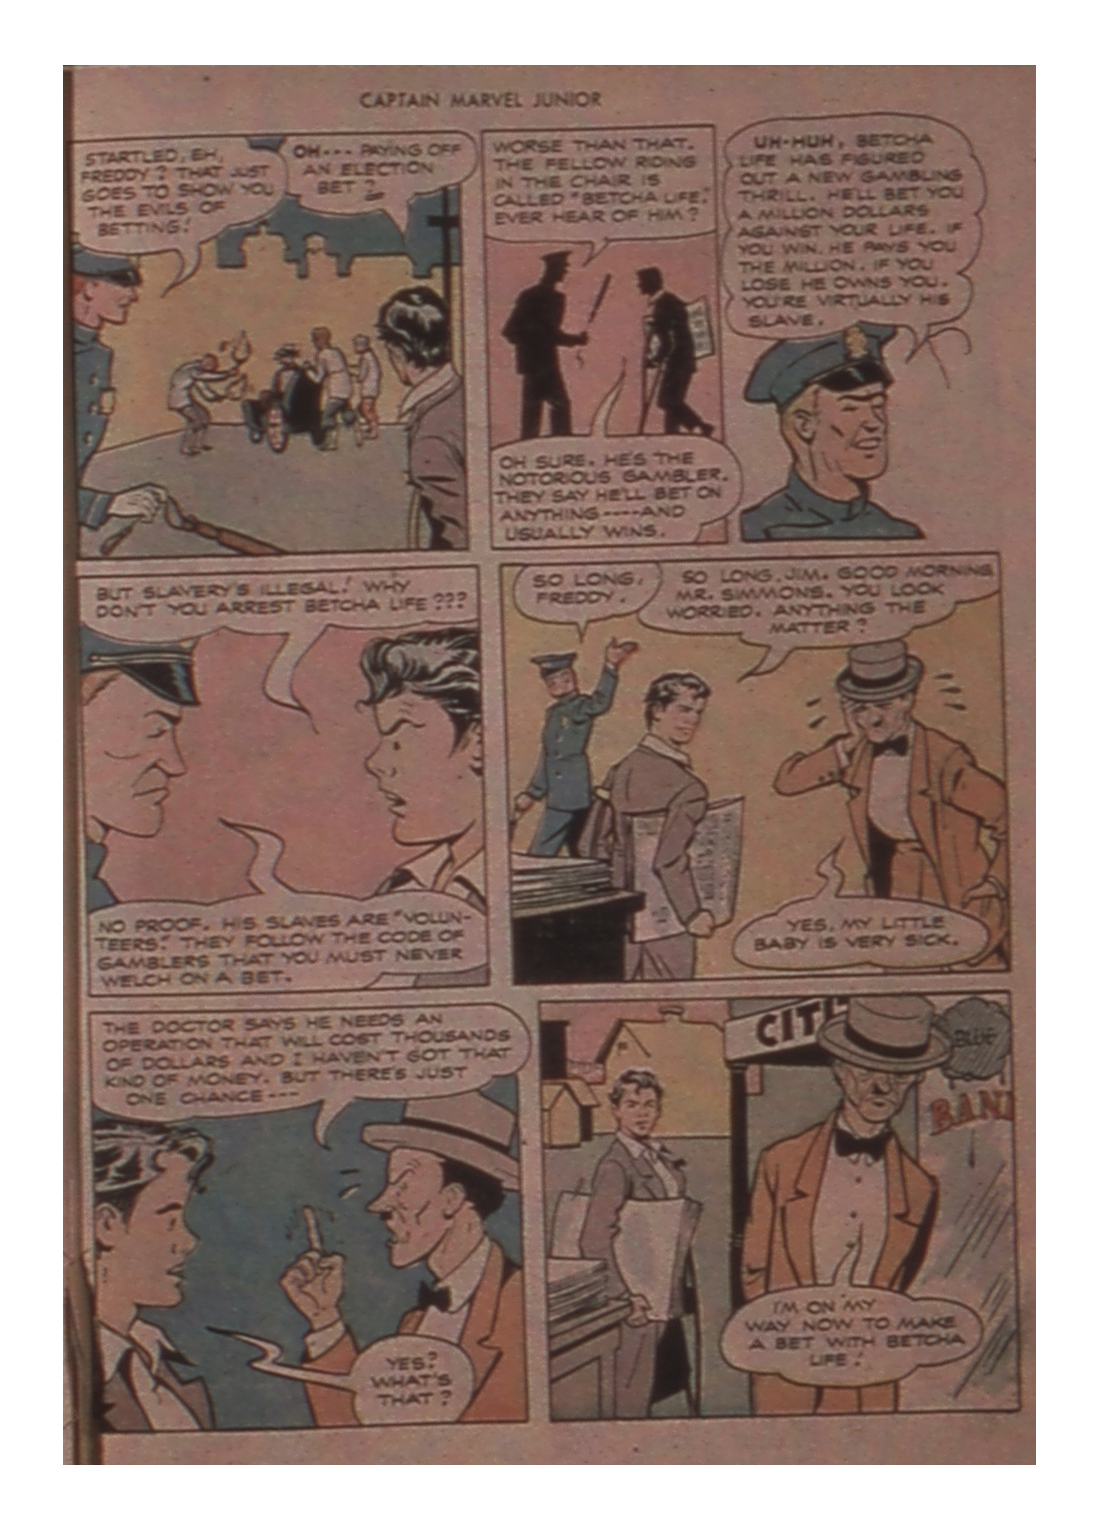 Read online Captain Marvel, Jr. comic -  Issue #56 - 43